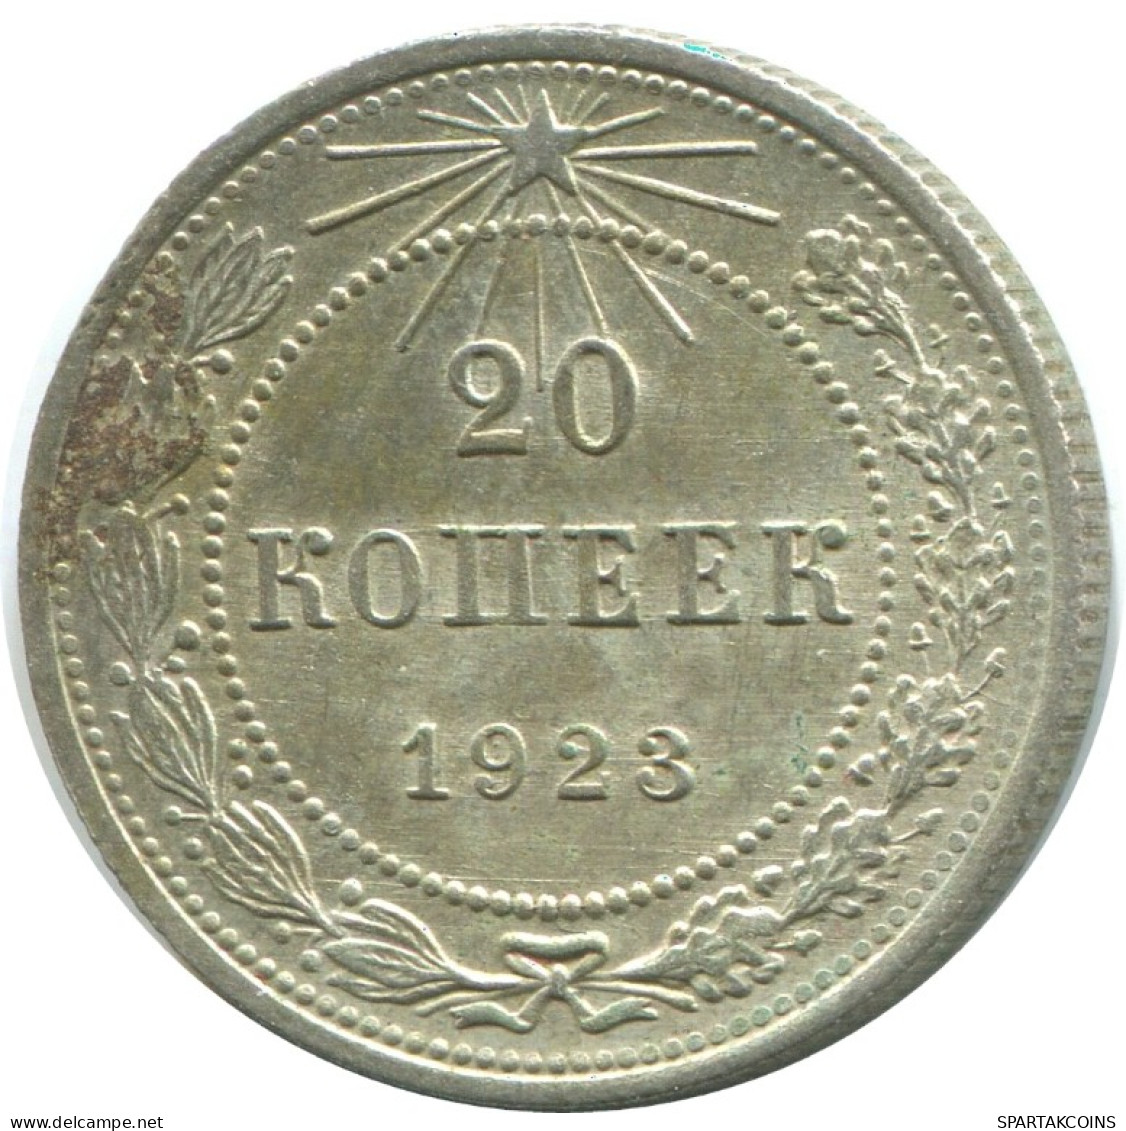 20 KOPEKS 1923 RUSSIA RSFSR SILVER Coin HIGH GRADE #AF469.4.U.A - Russie